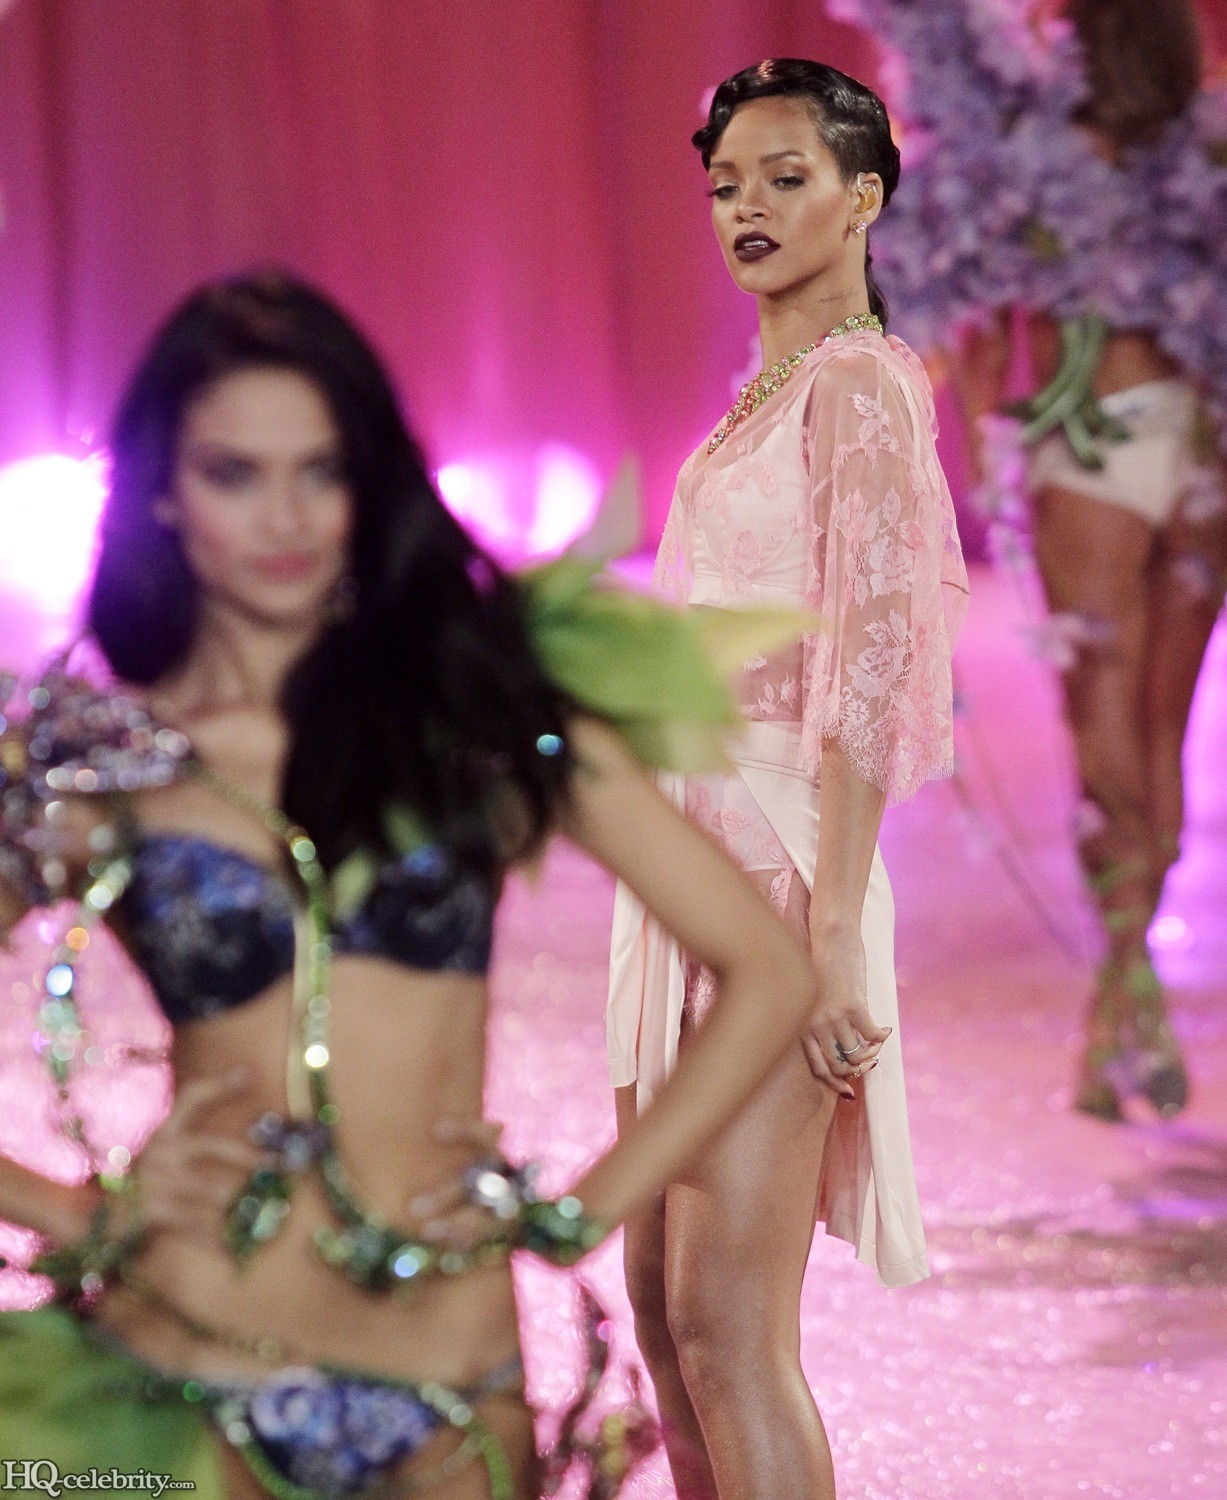 Rihanna performs at the Victoria's Secret Fashion Show.